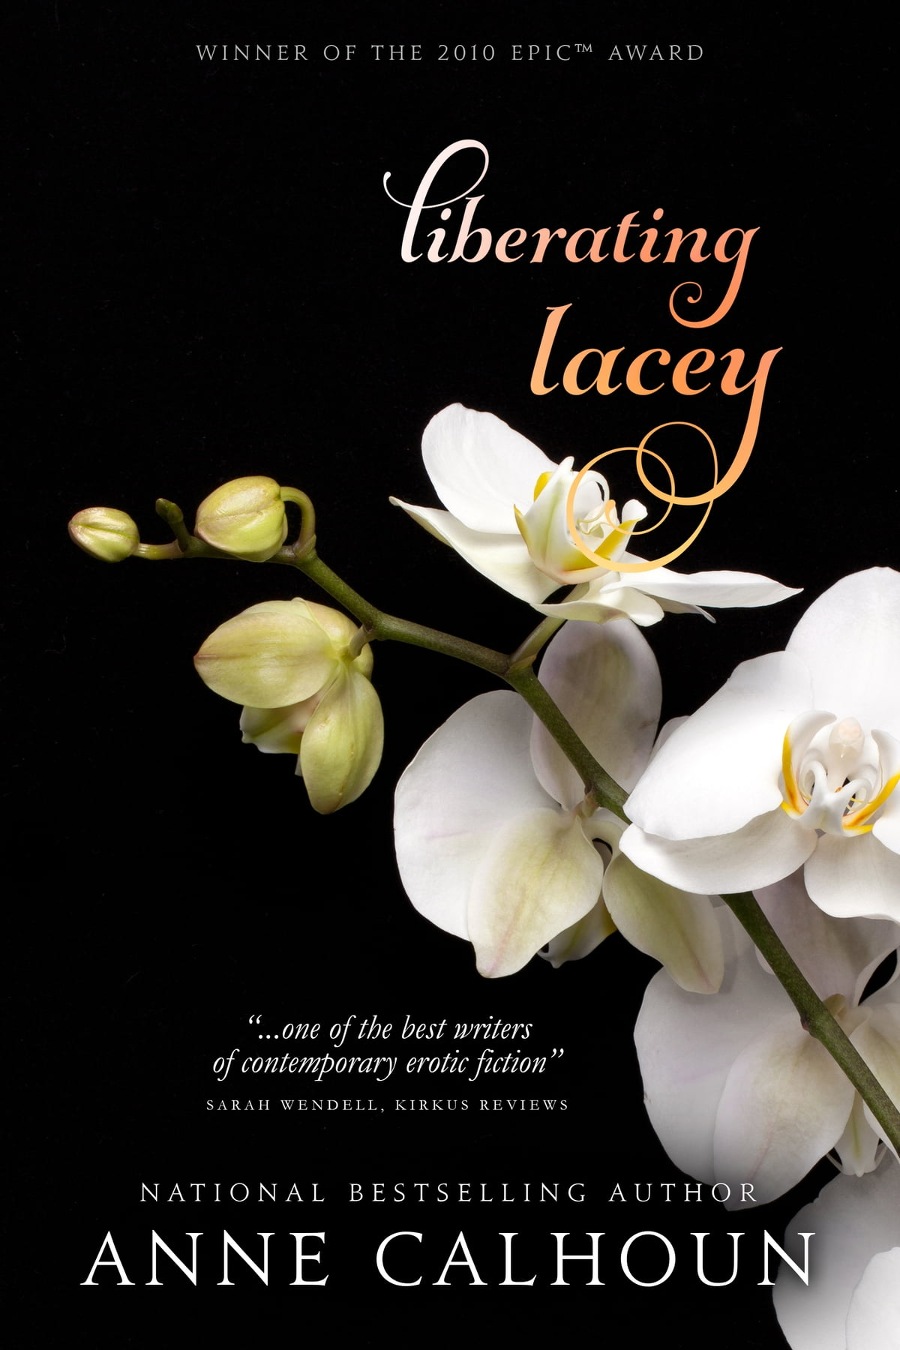 liberating lacey